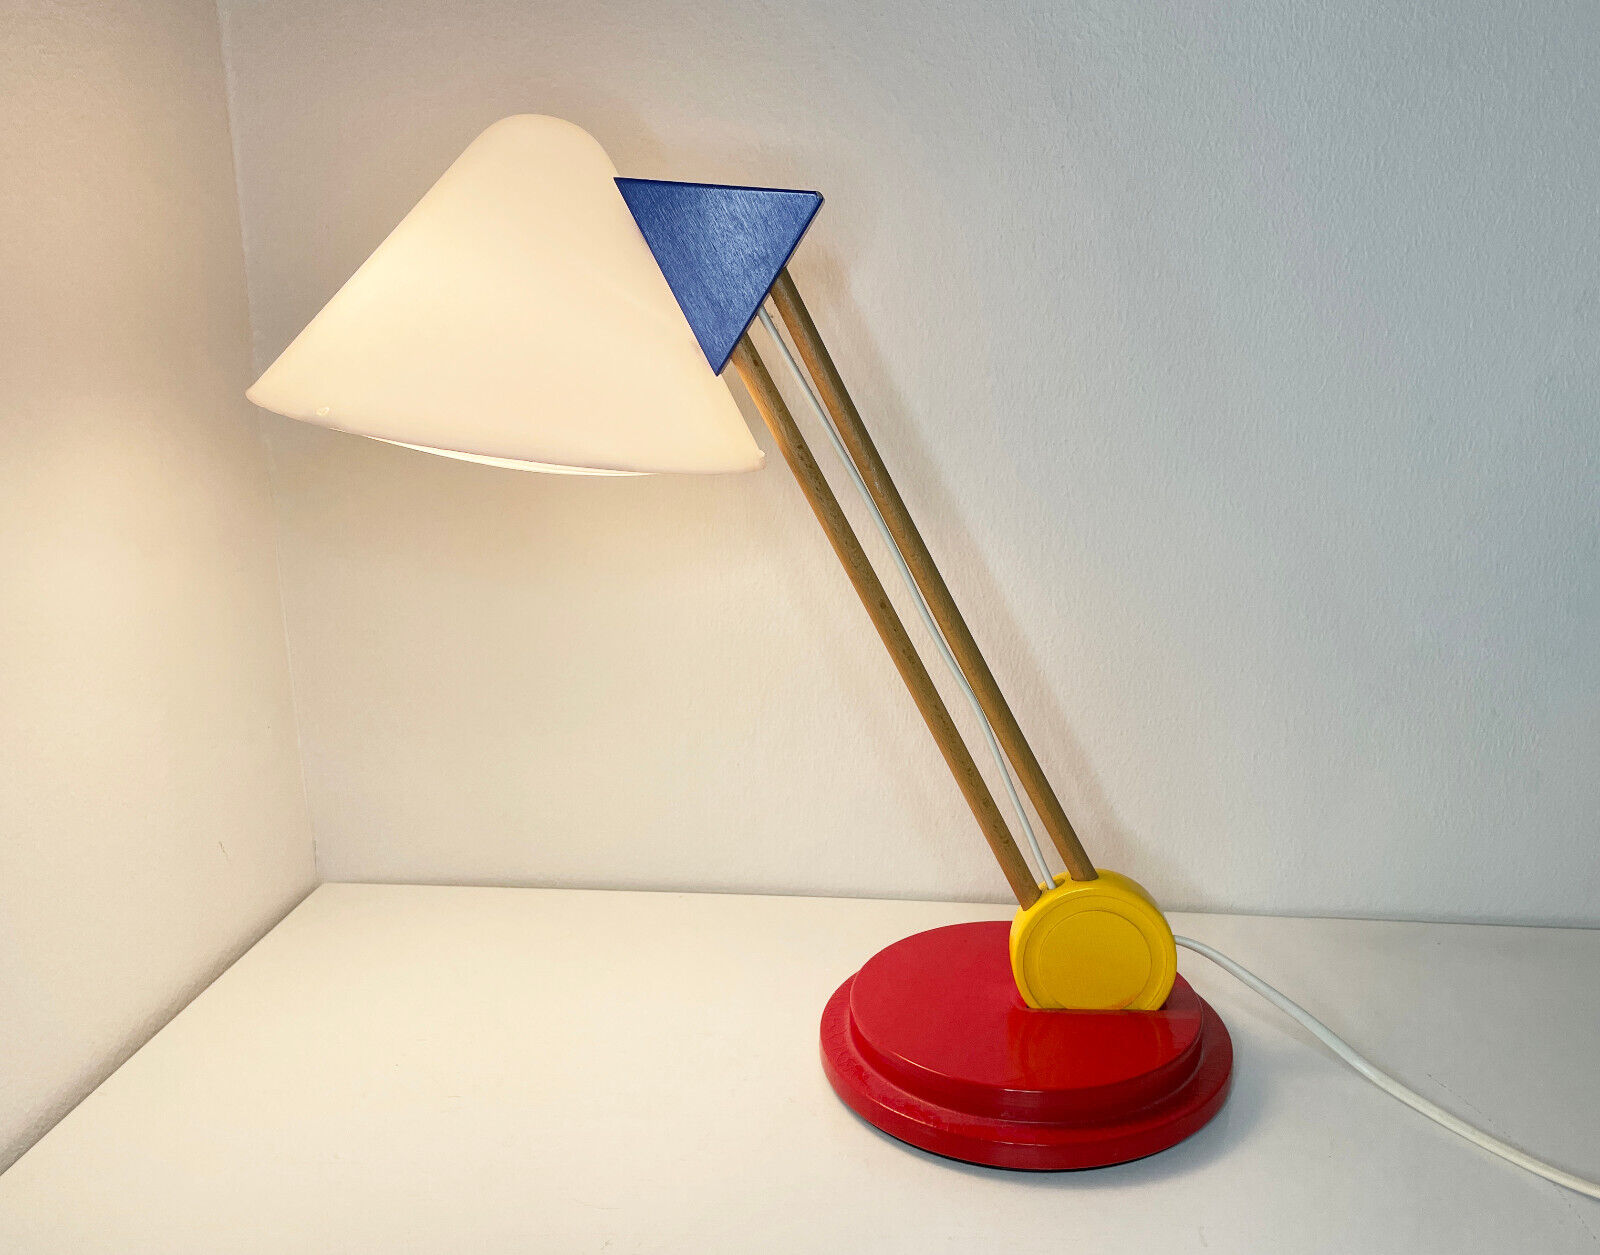 Ettore Sottsass, Memphis style desk lamp for IKEA, vintage scandinavian italian